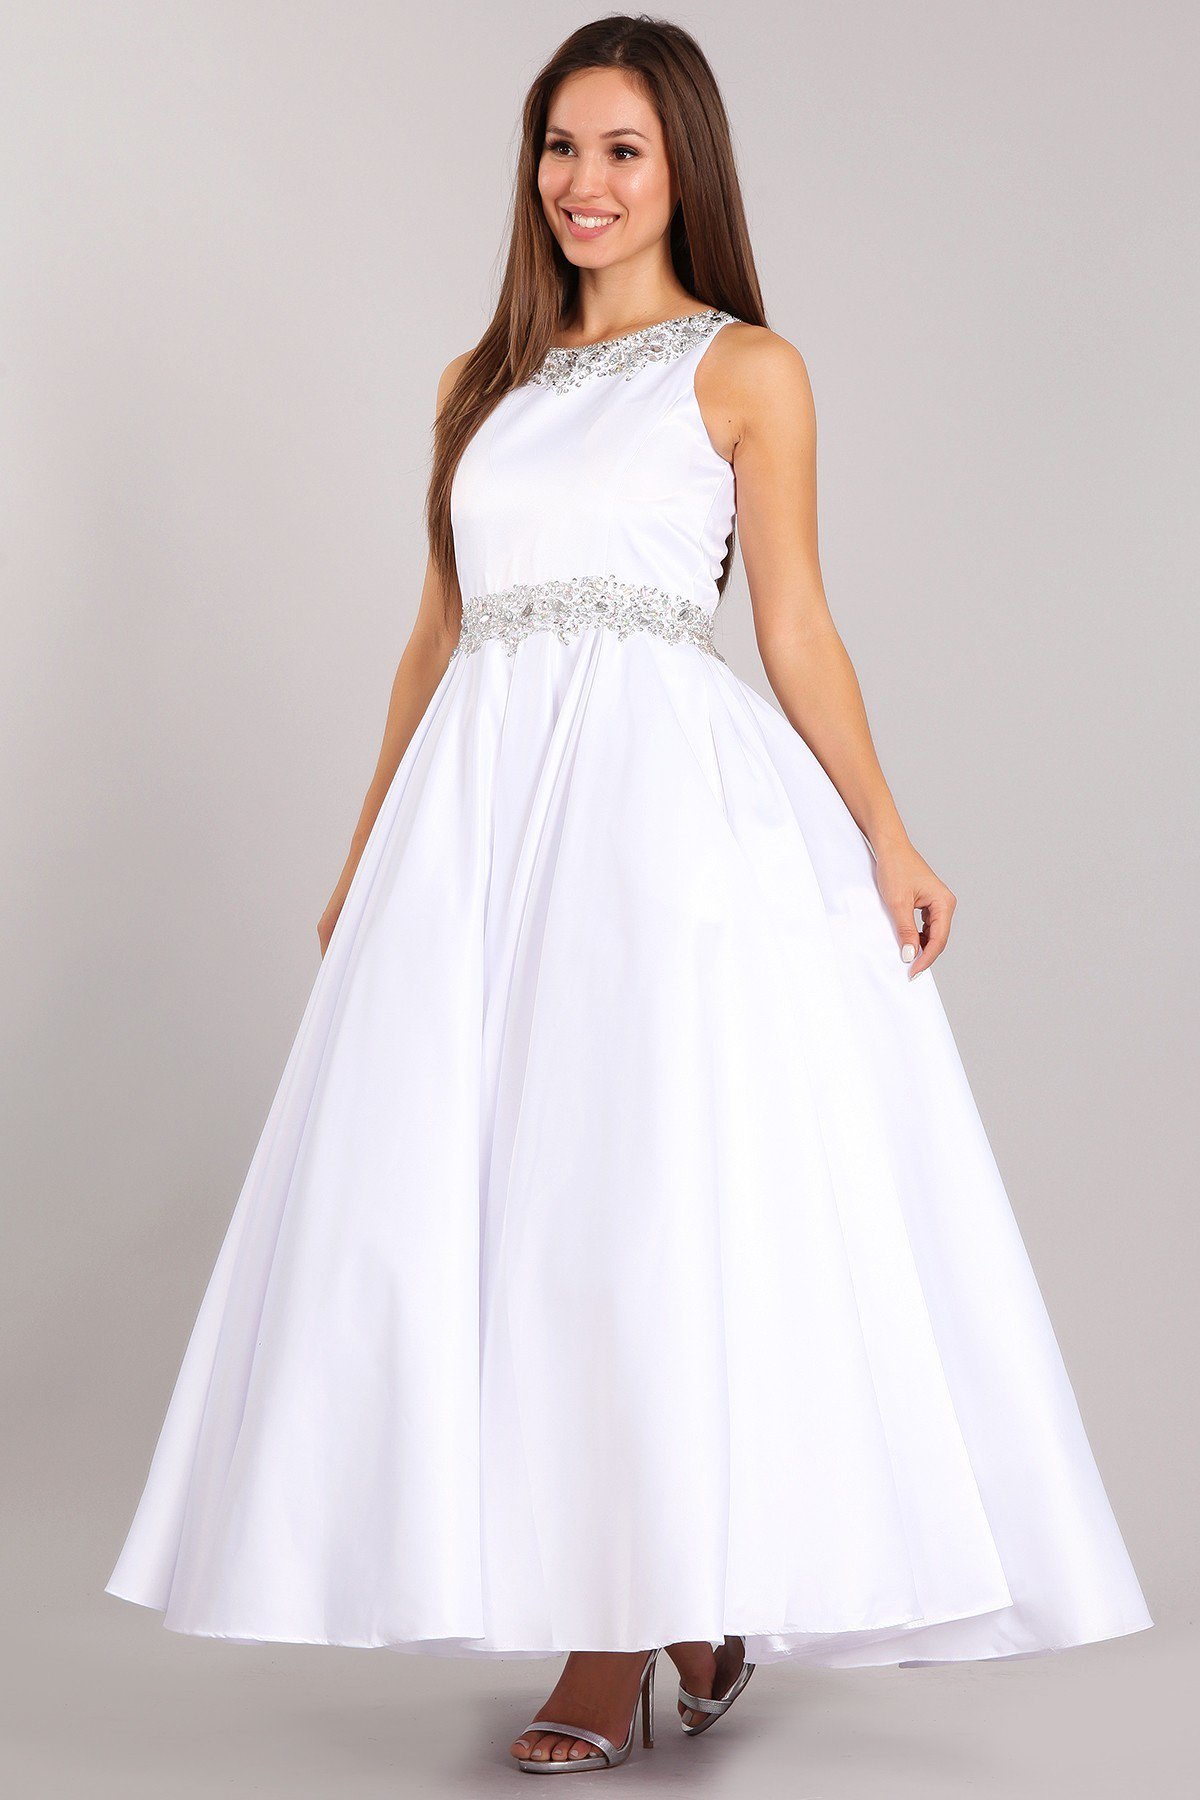 white sleeveless dress